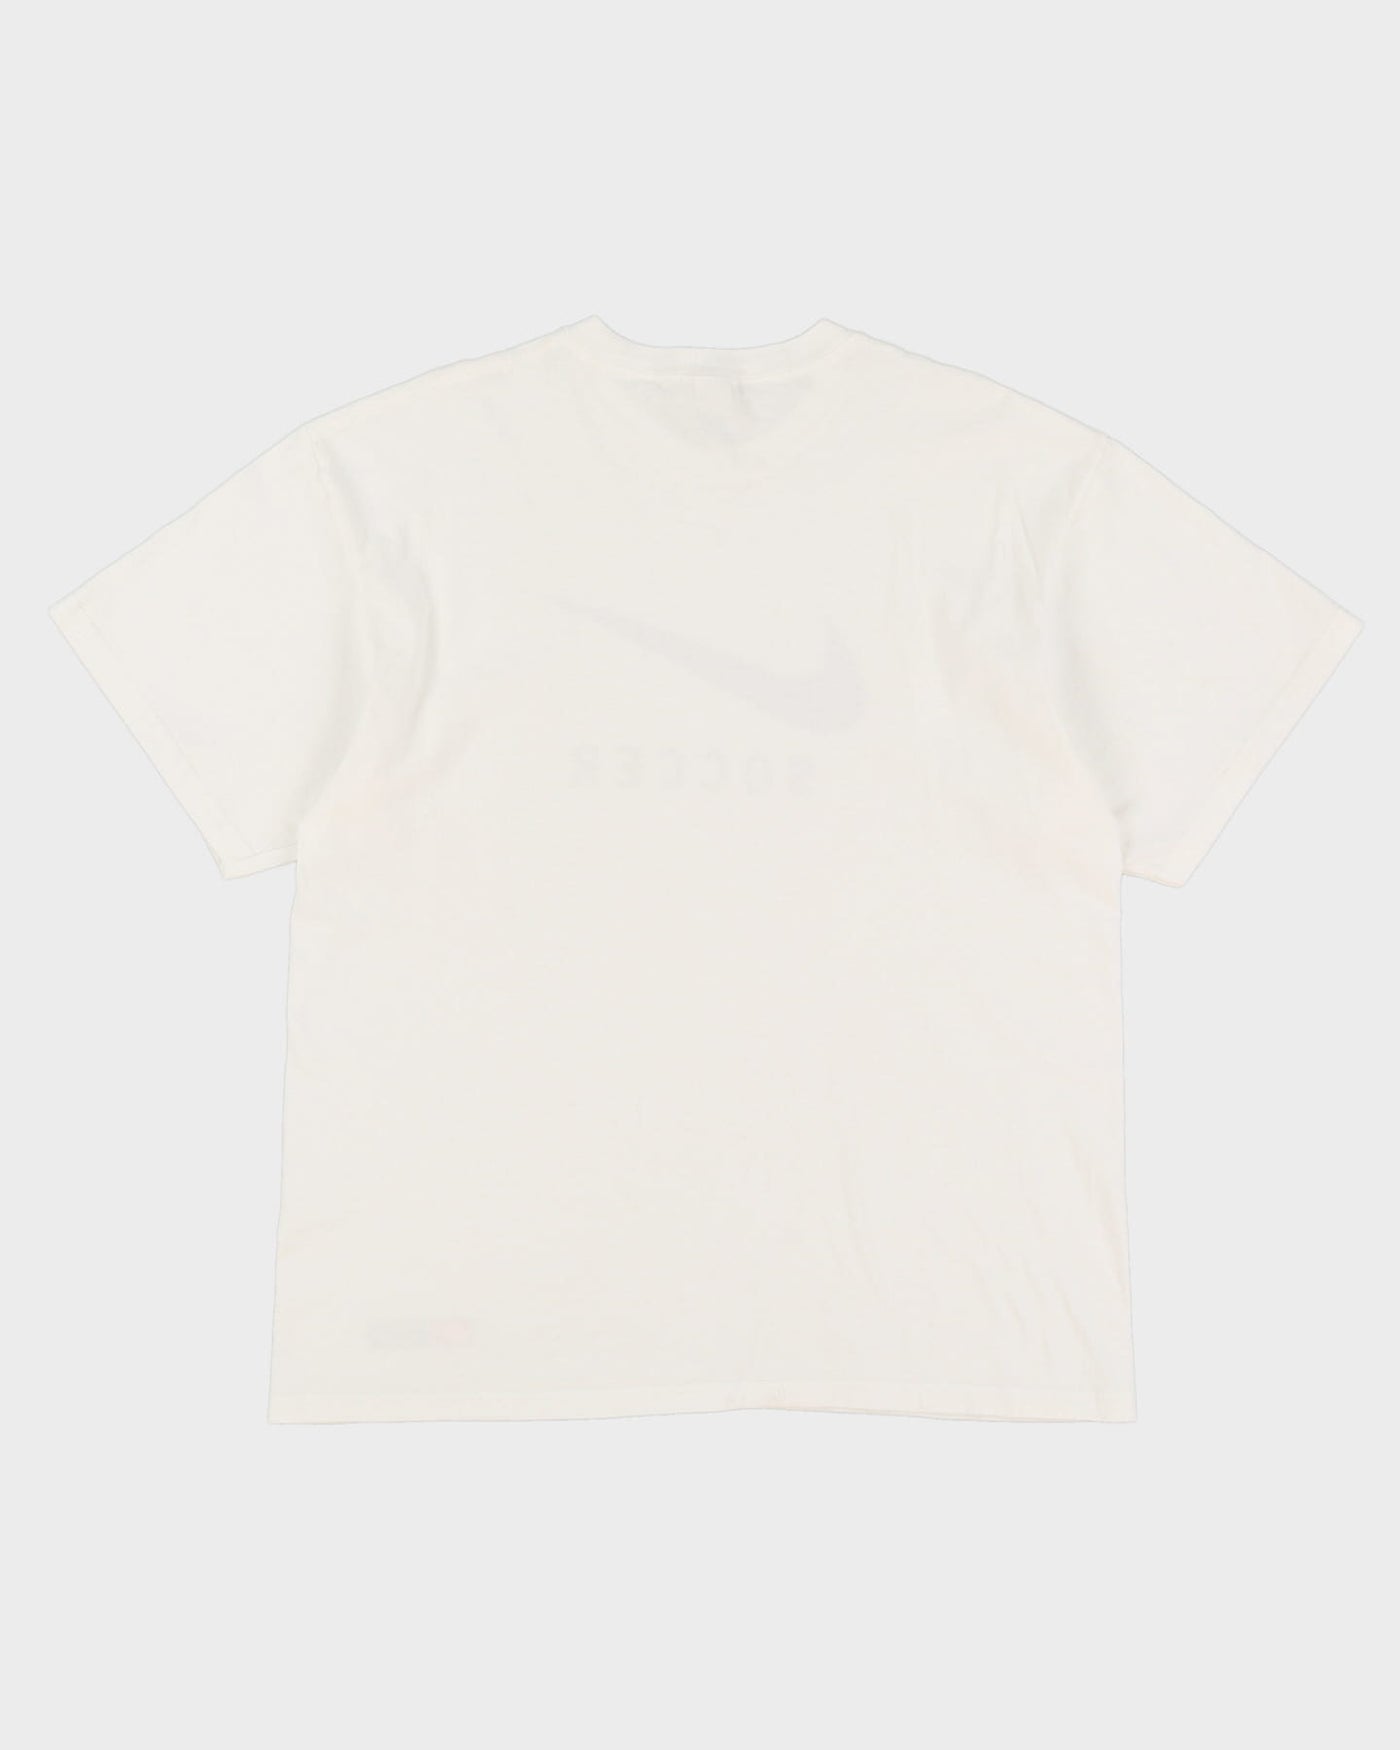 Vintage 90s Nike Soccer White Graphic T-Shirt - L